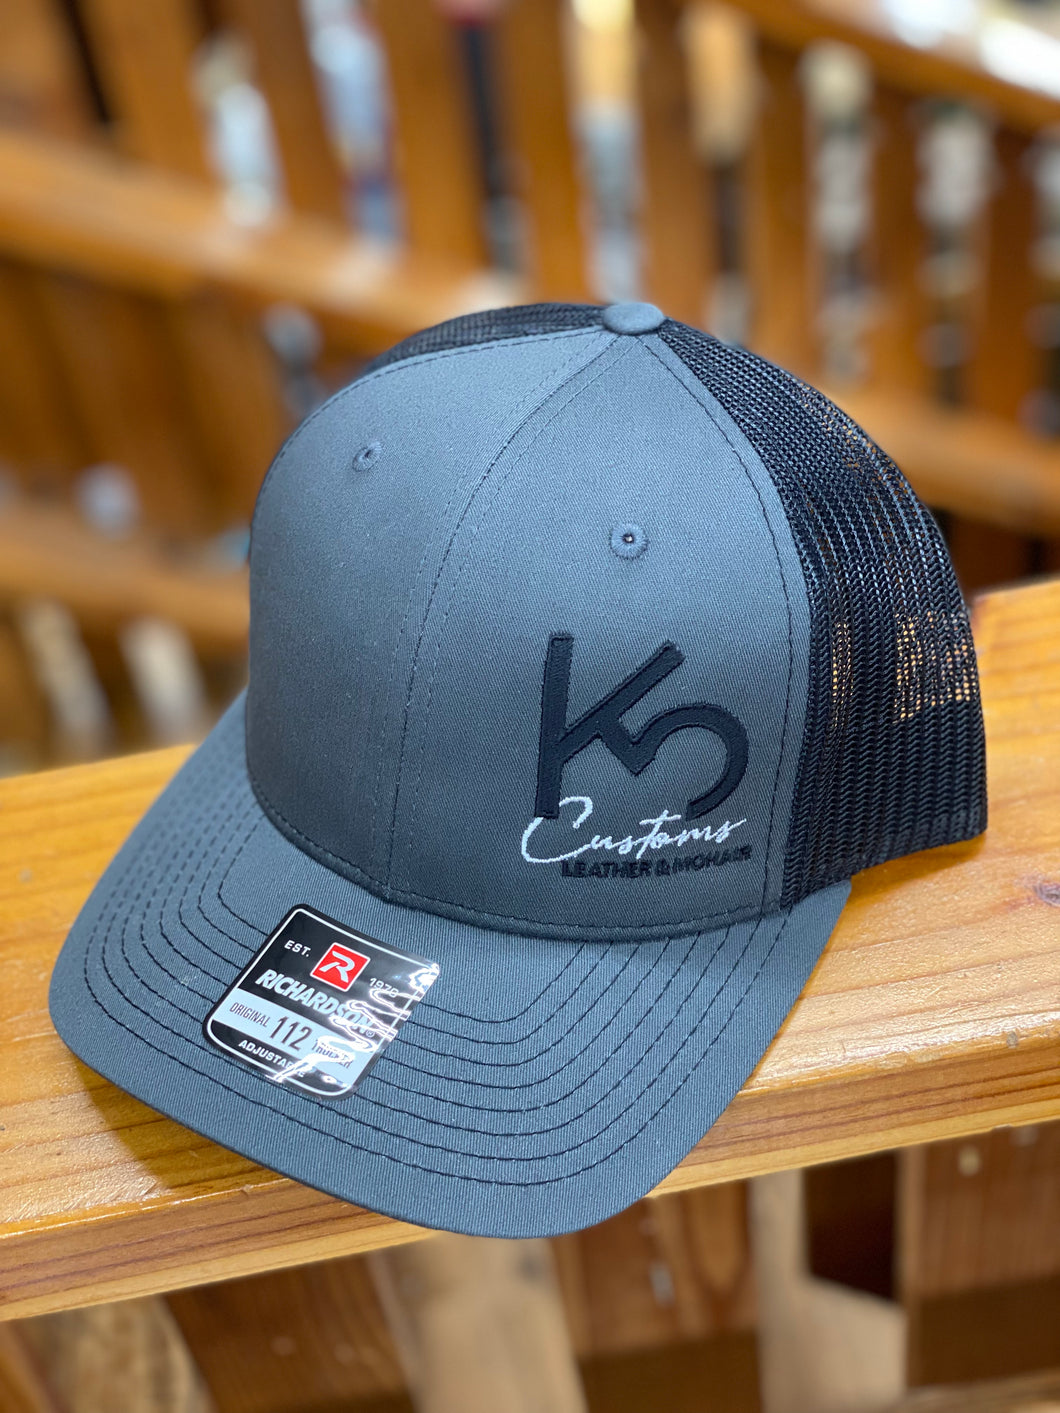 K5 Customs Hat